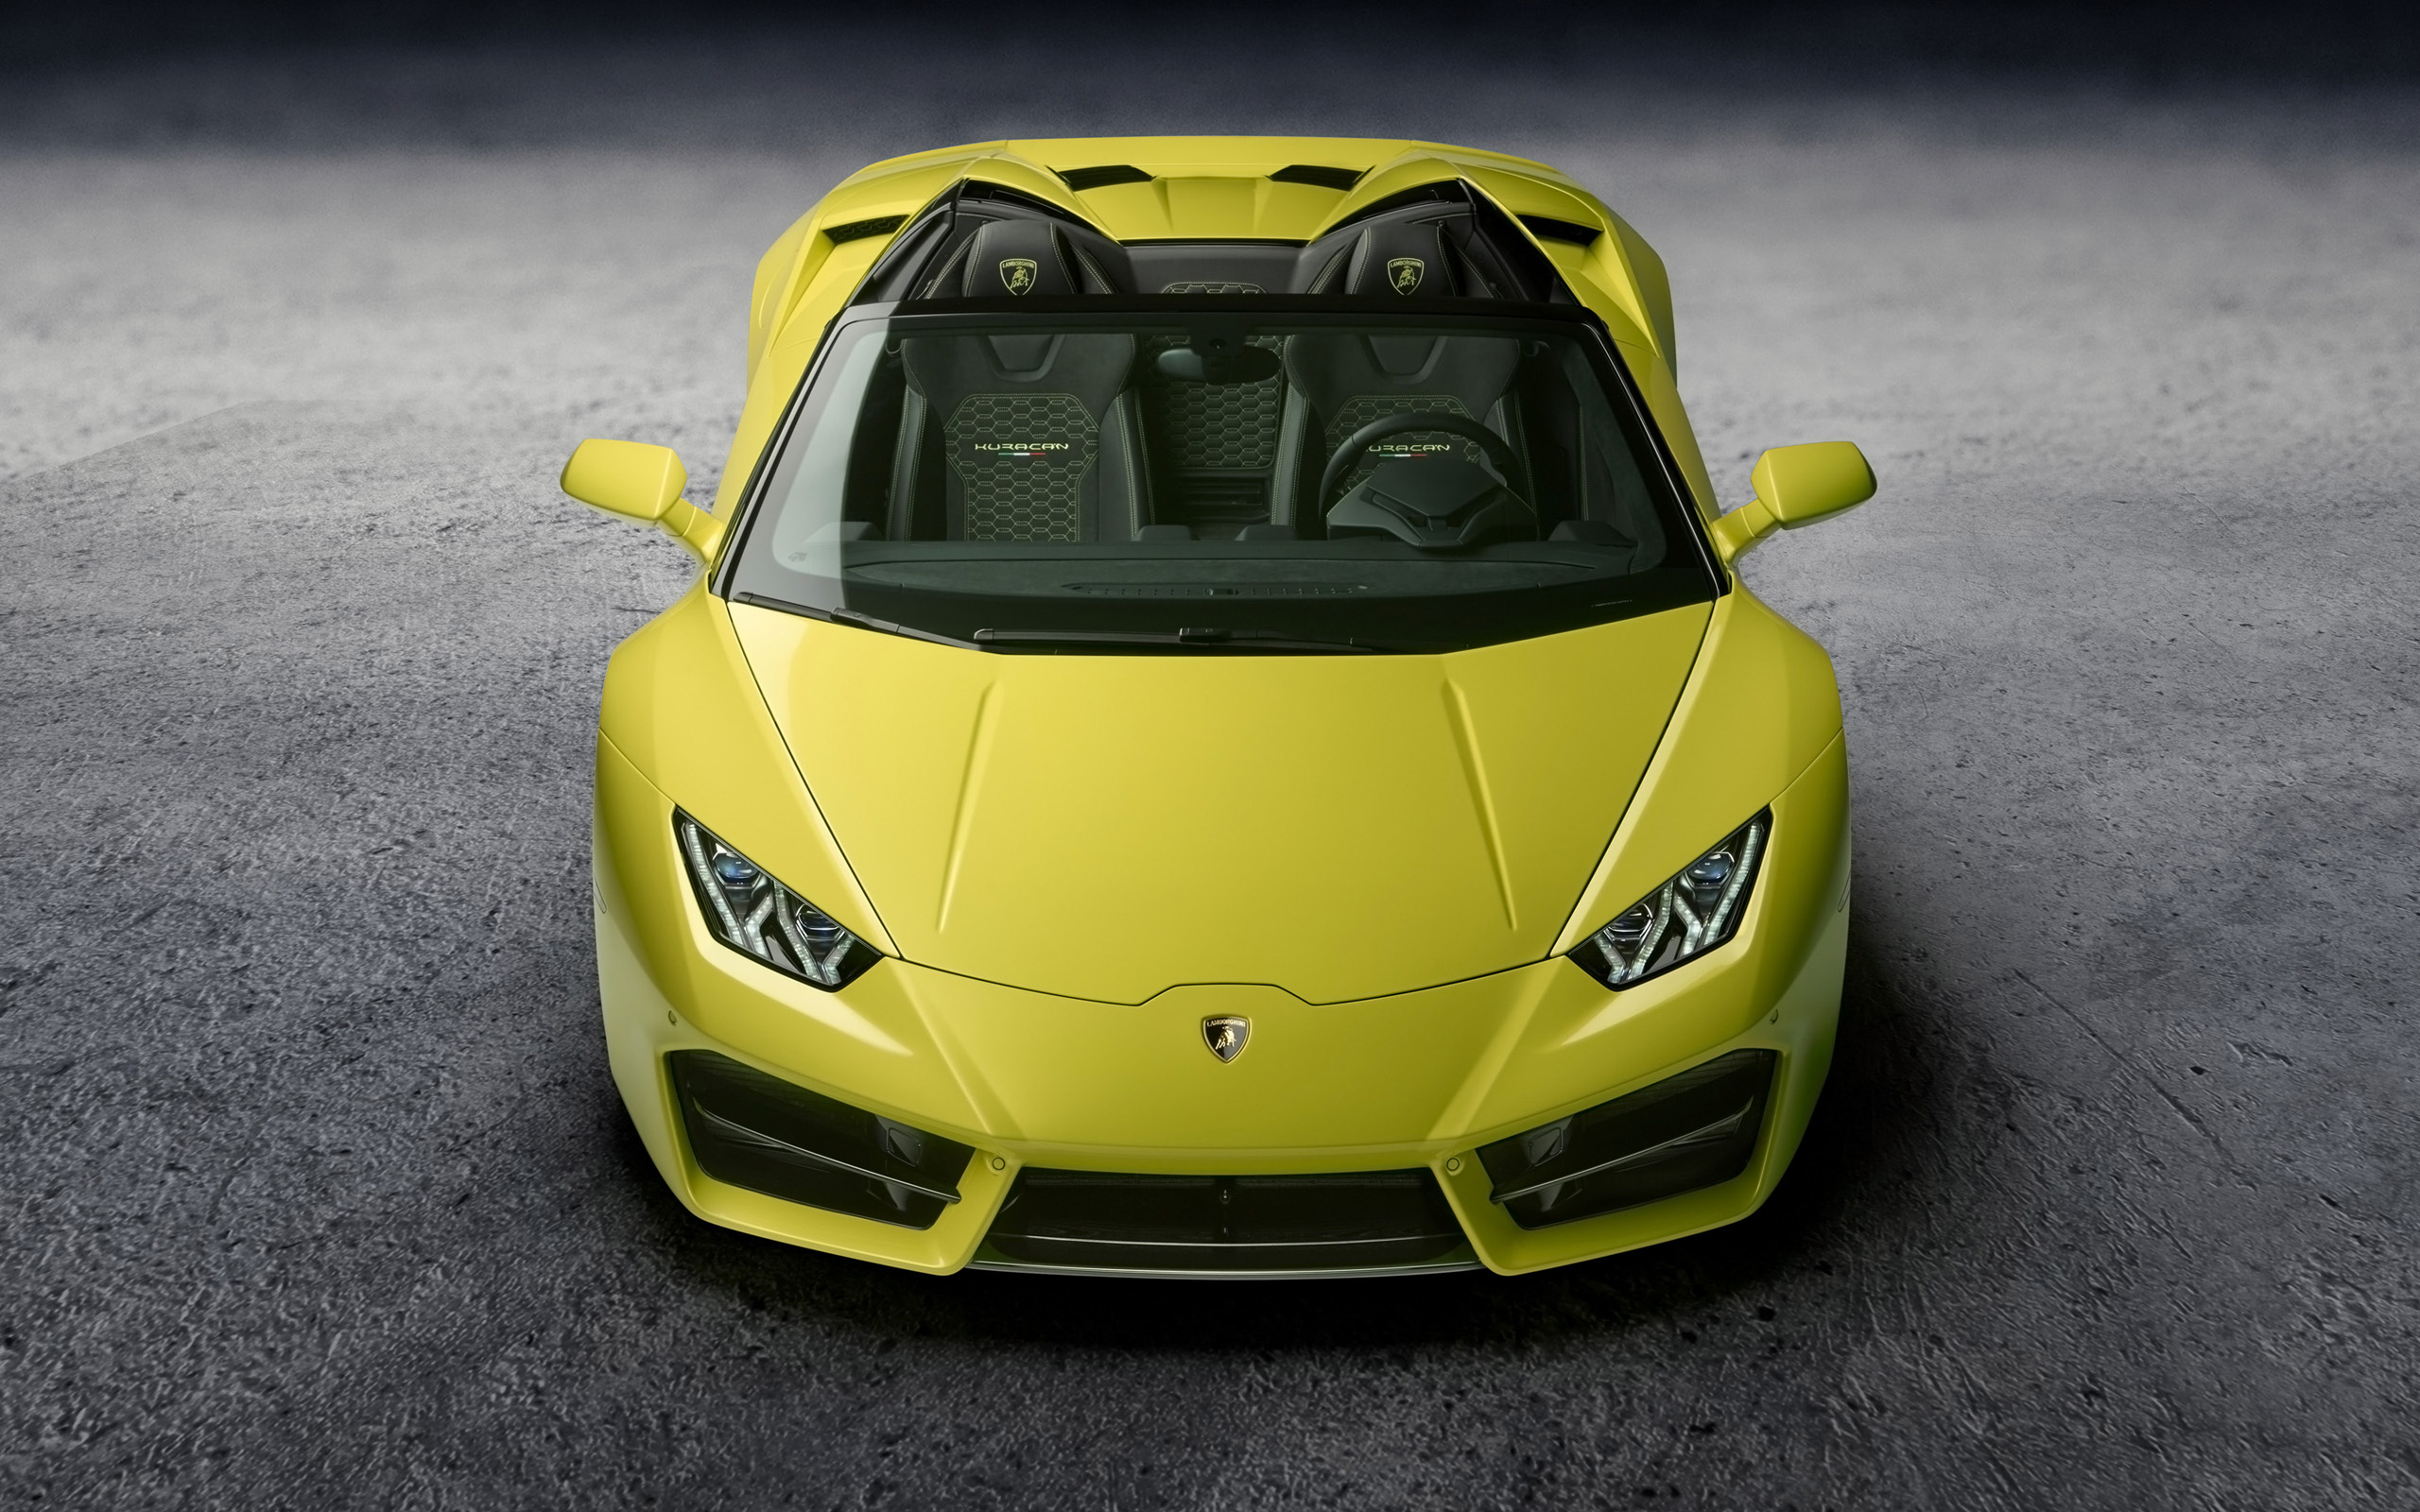 Descargar fondos de escritorio de Lamborghini Huracán Rwd Spyder HD